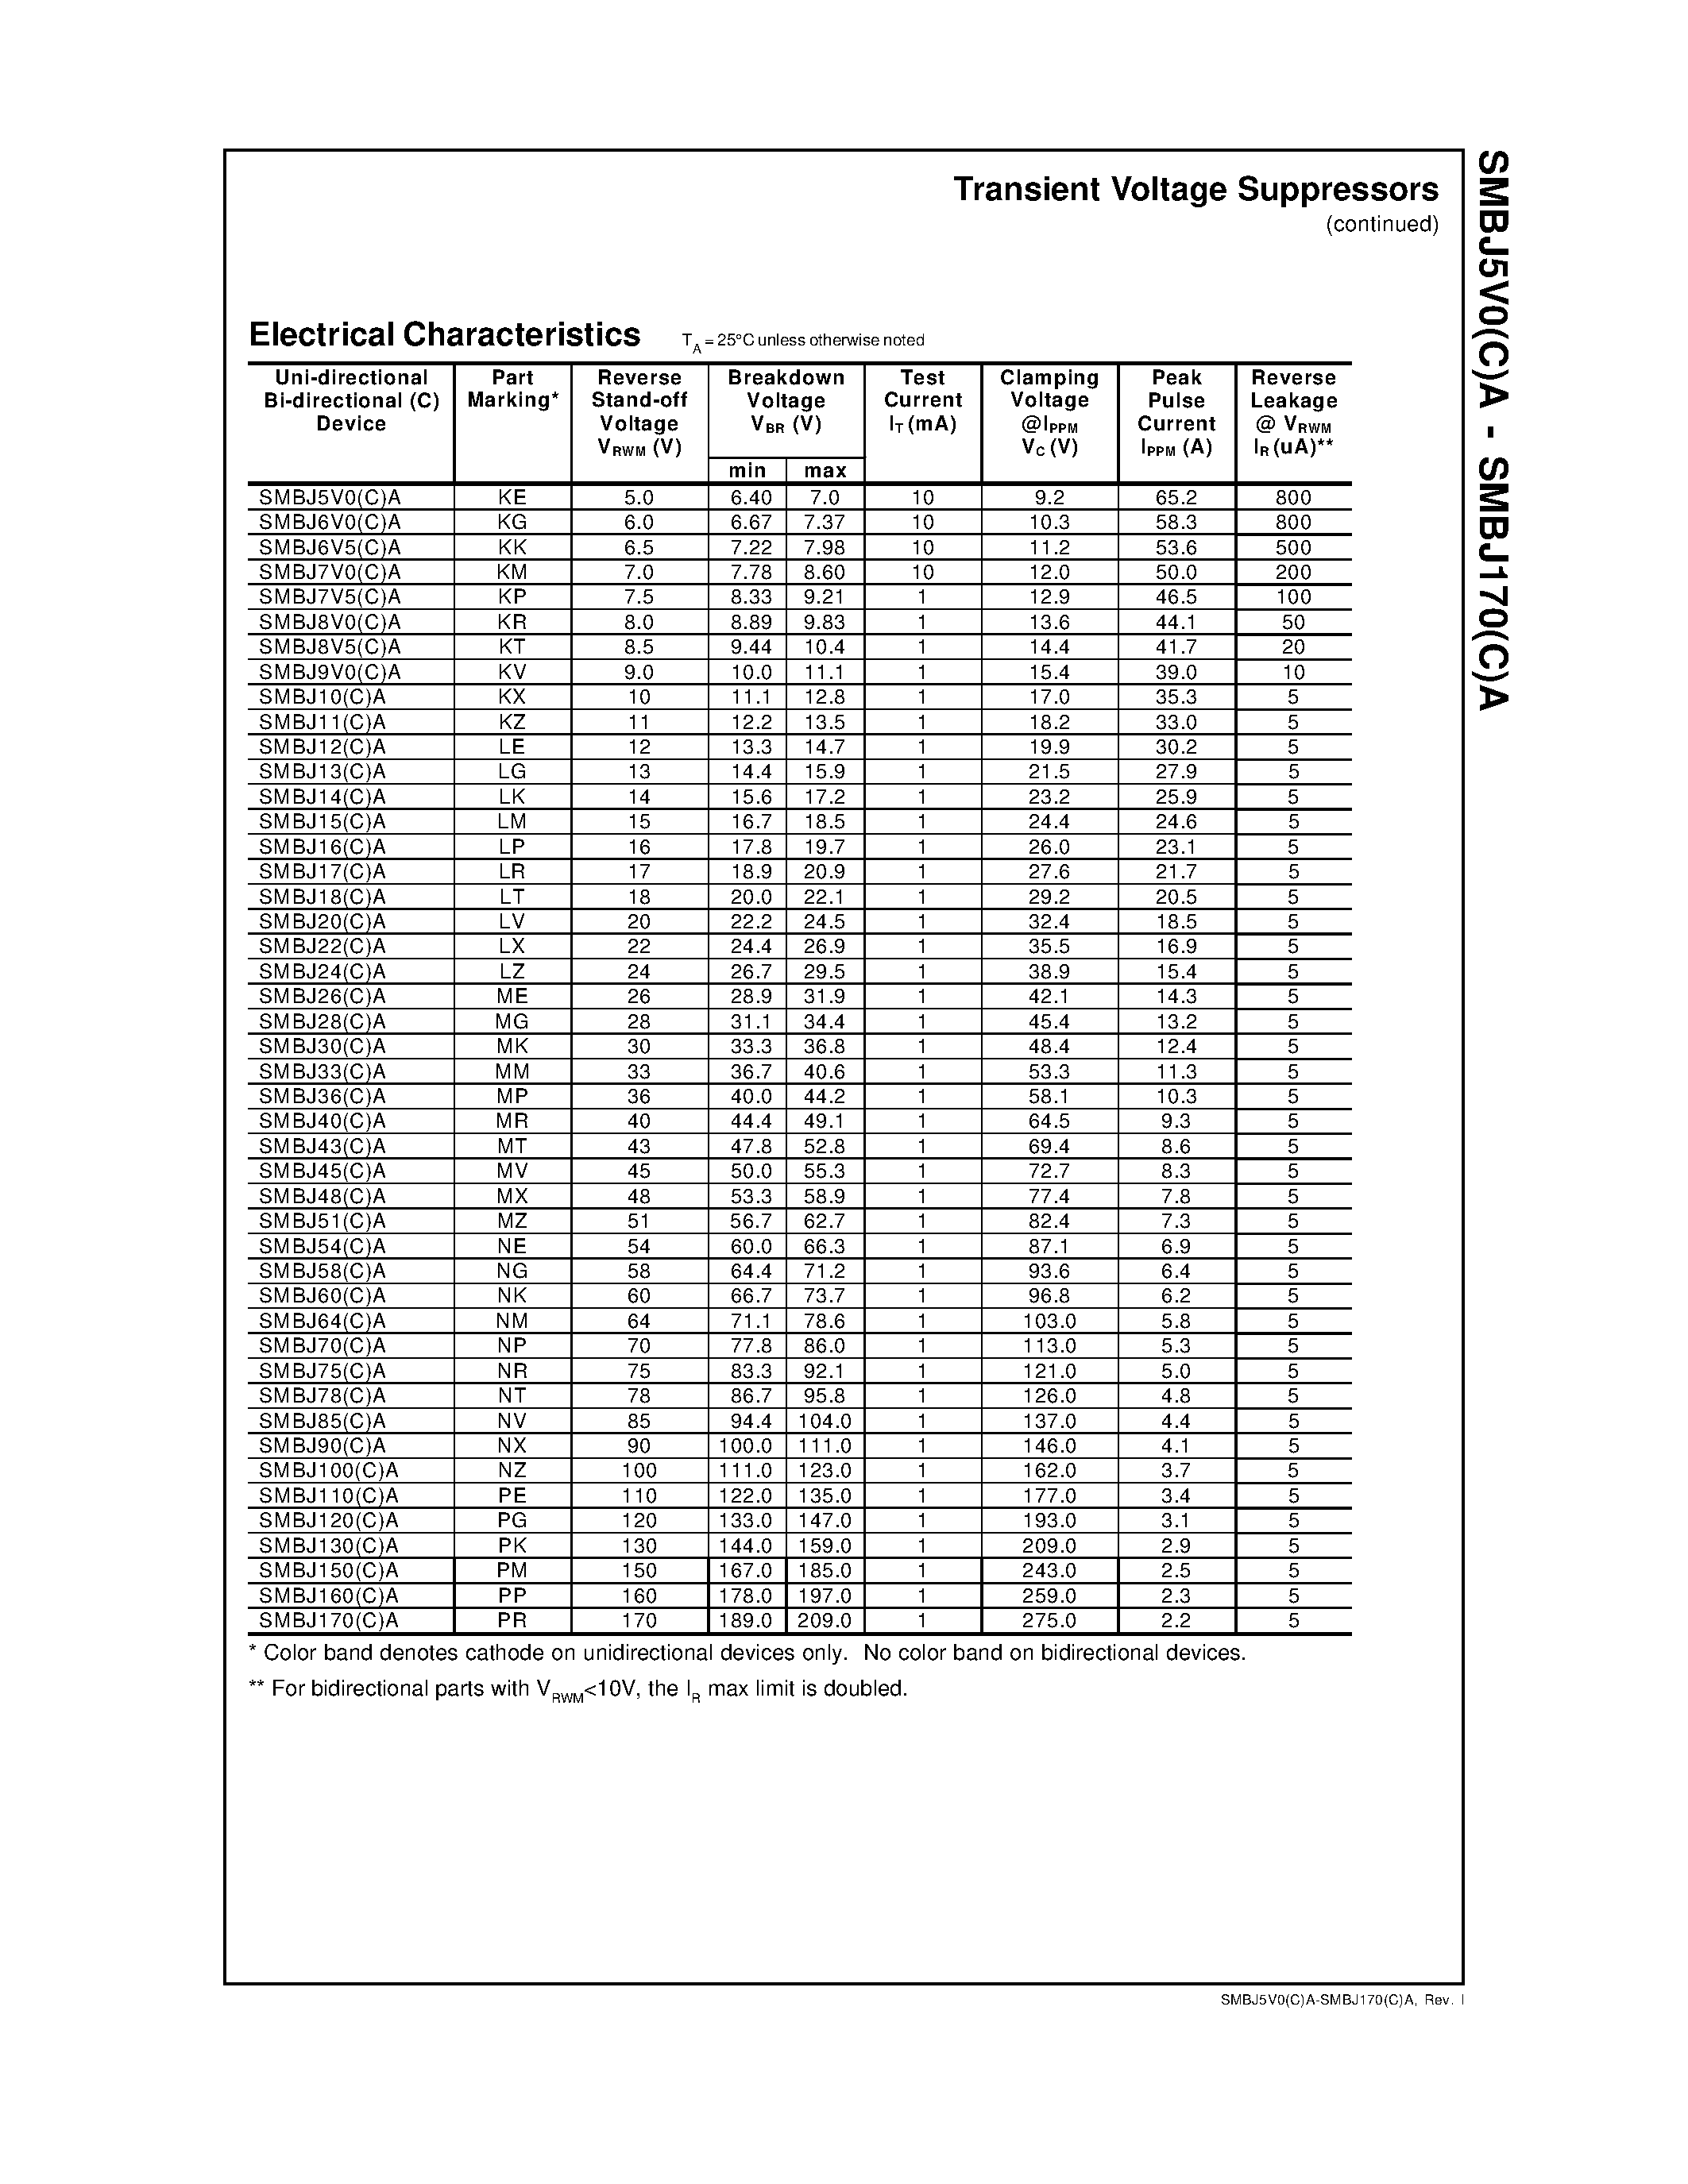 Datasheet SMBJ10A - Transient Voltage Suppressors SMBJ5V0(C)A - SMBJ170(C)A page 2